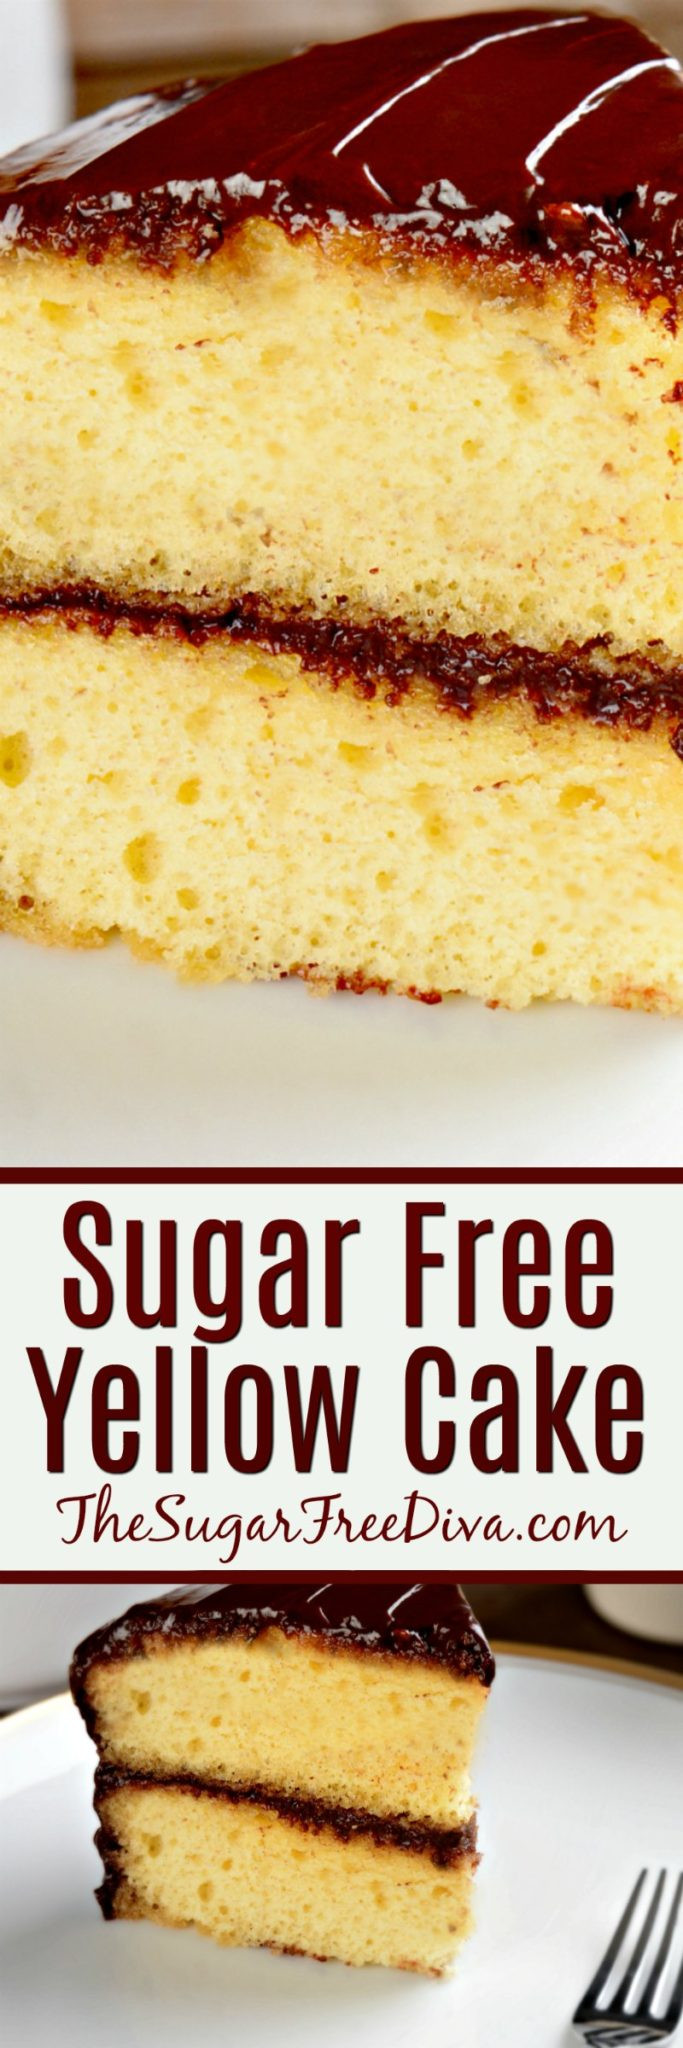 Sugar Free Birthday Cakes
 A Basic and Easy Sugar Free Yellow Cake Recipe